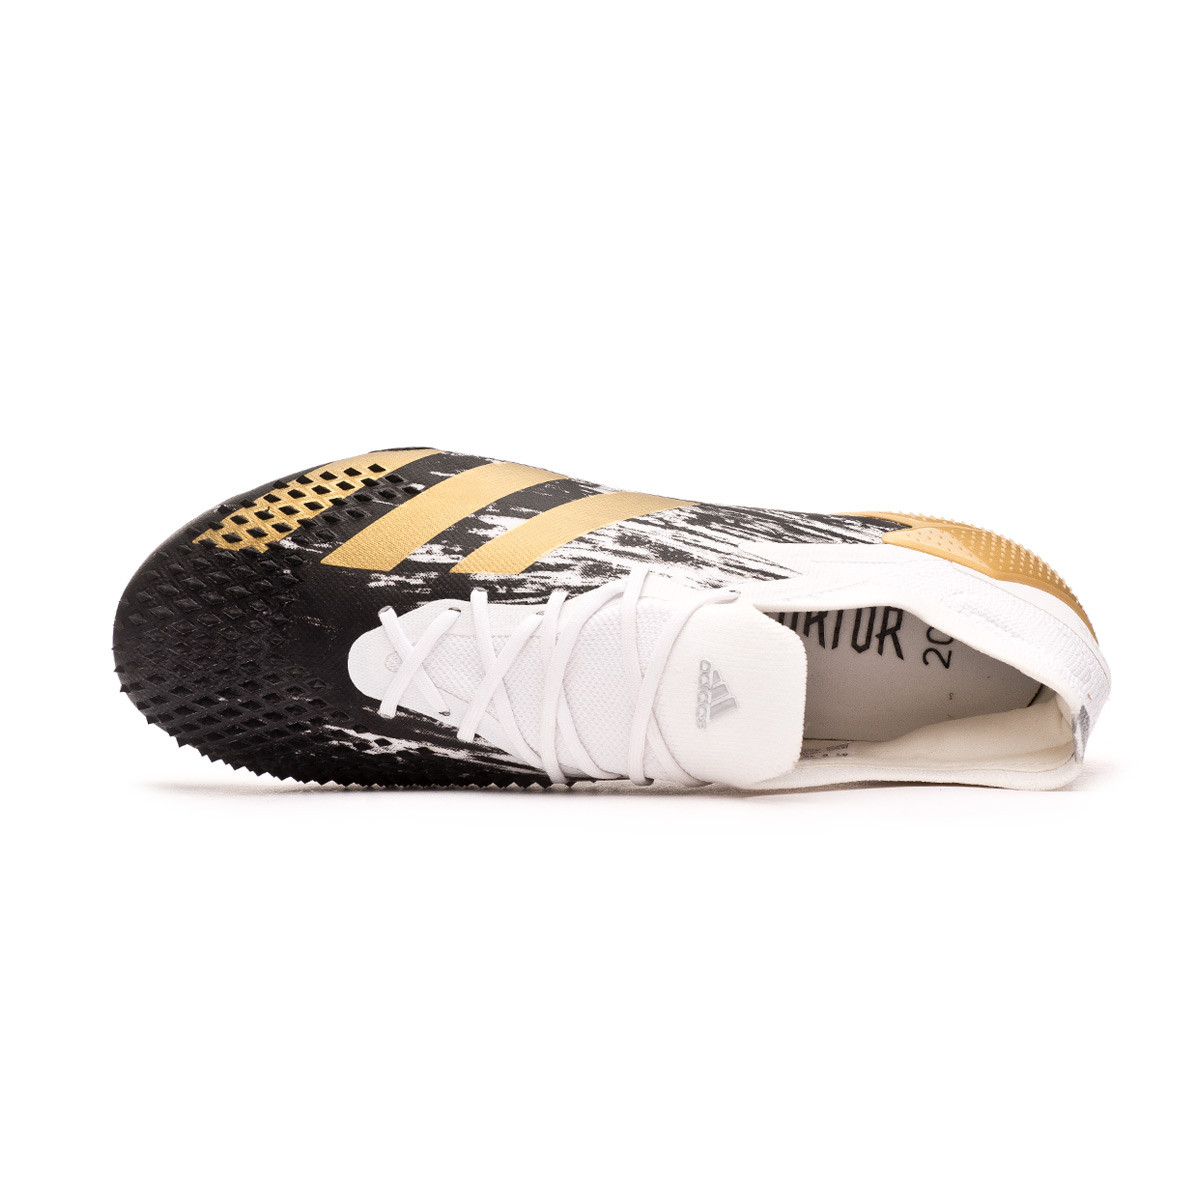 Chaussure de Foot White-Gold Metallic-Core Black adidas Predator Mutator 20.1 L SG